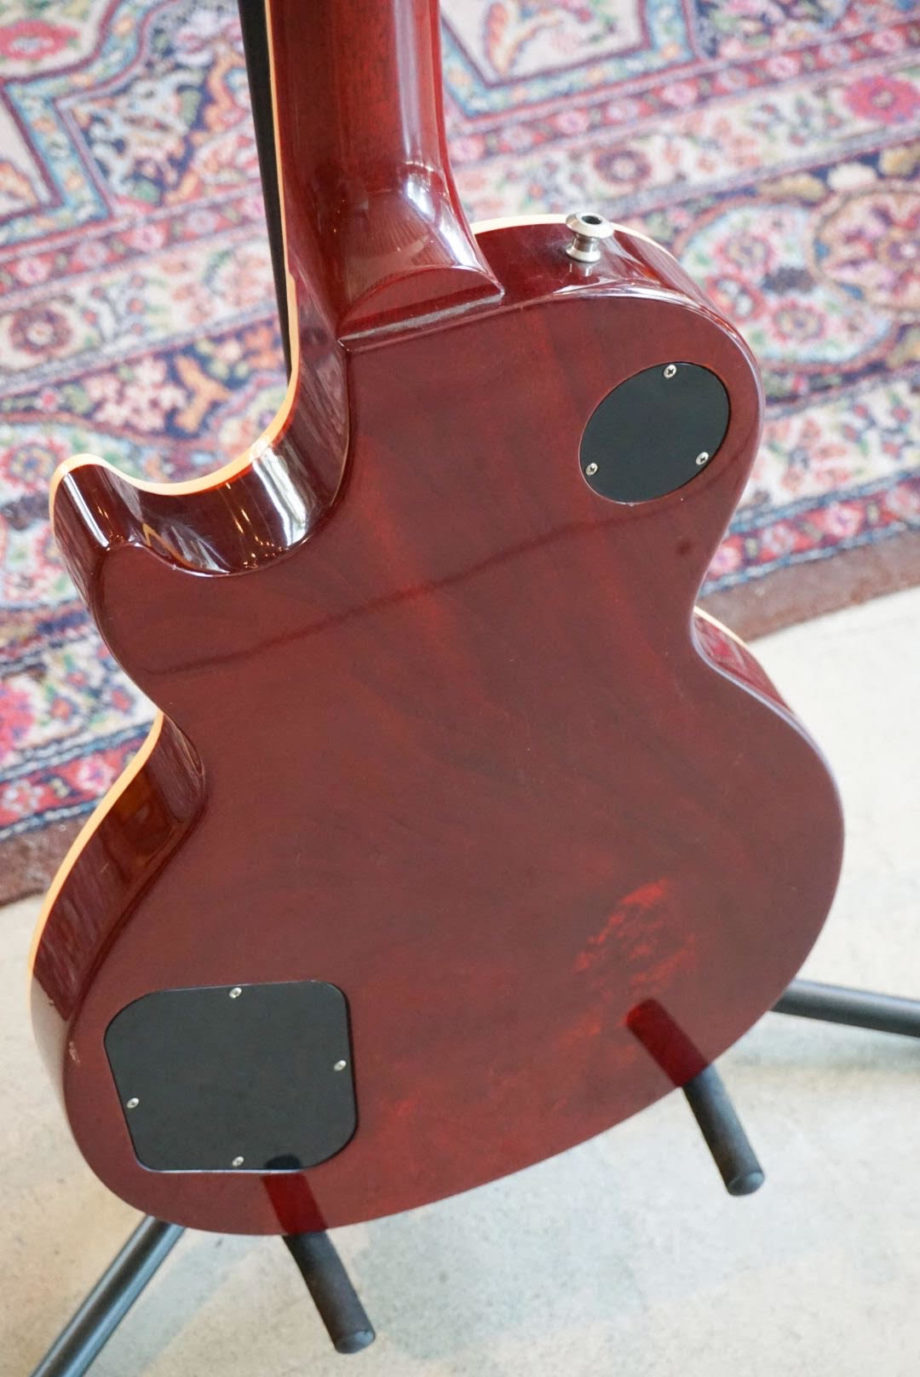 2003 Gibson Les Paul Standard Plus